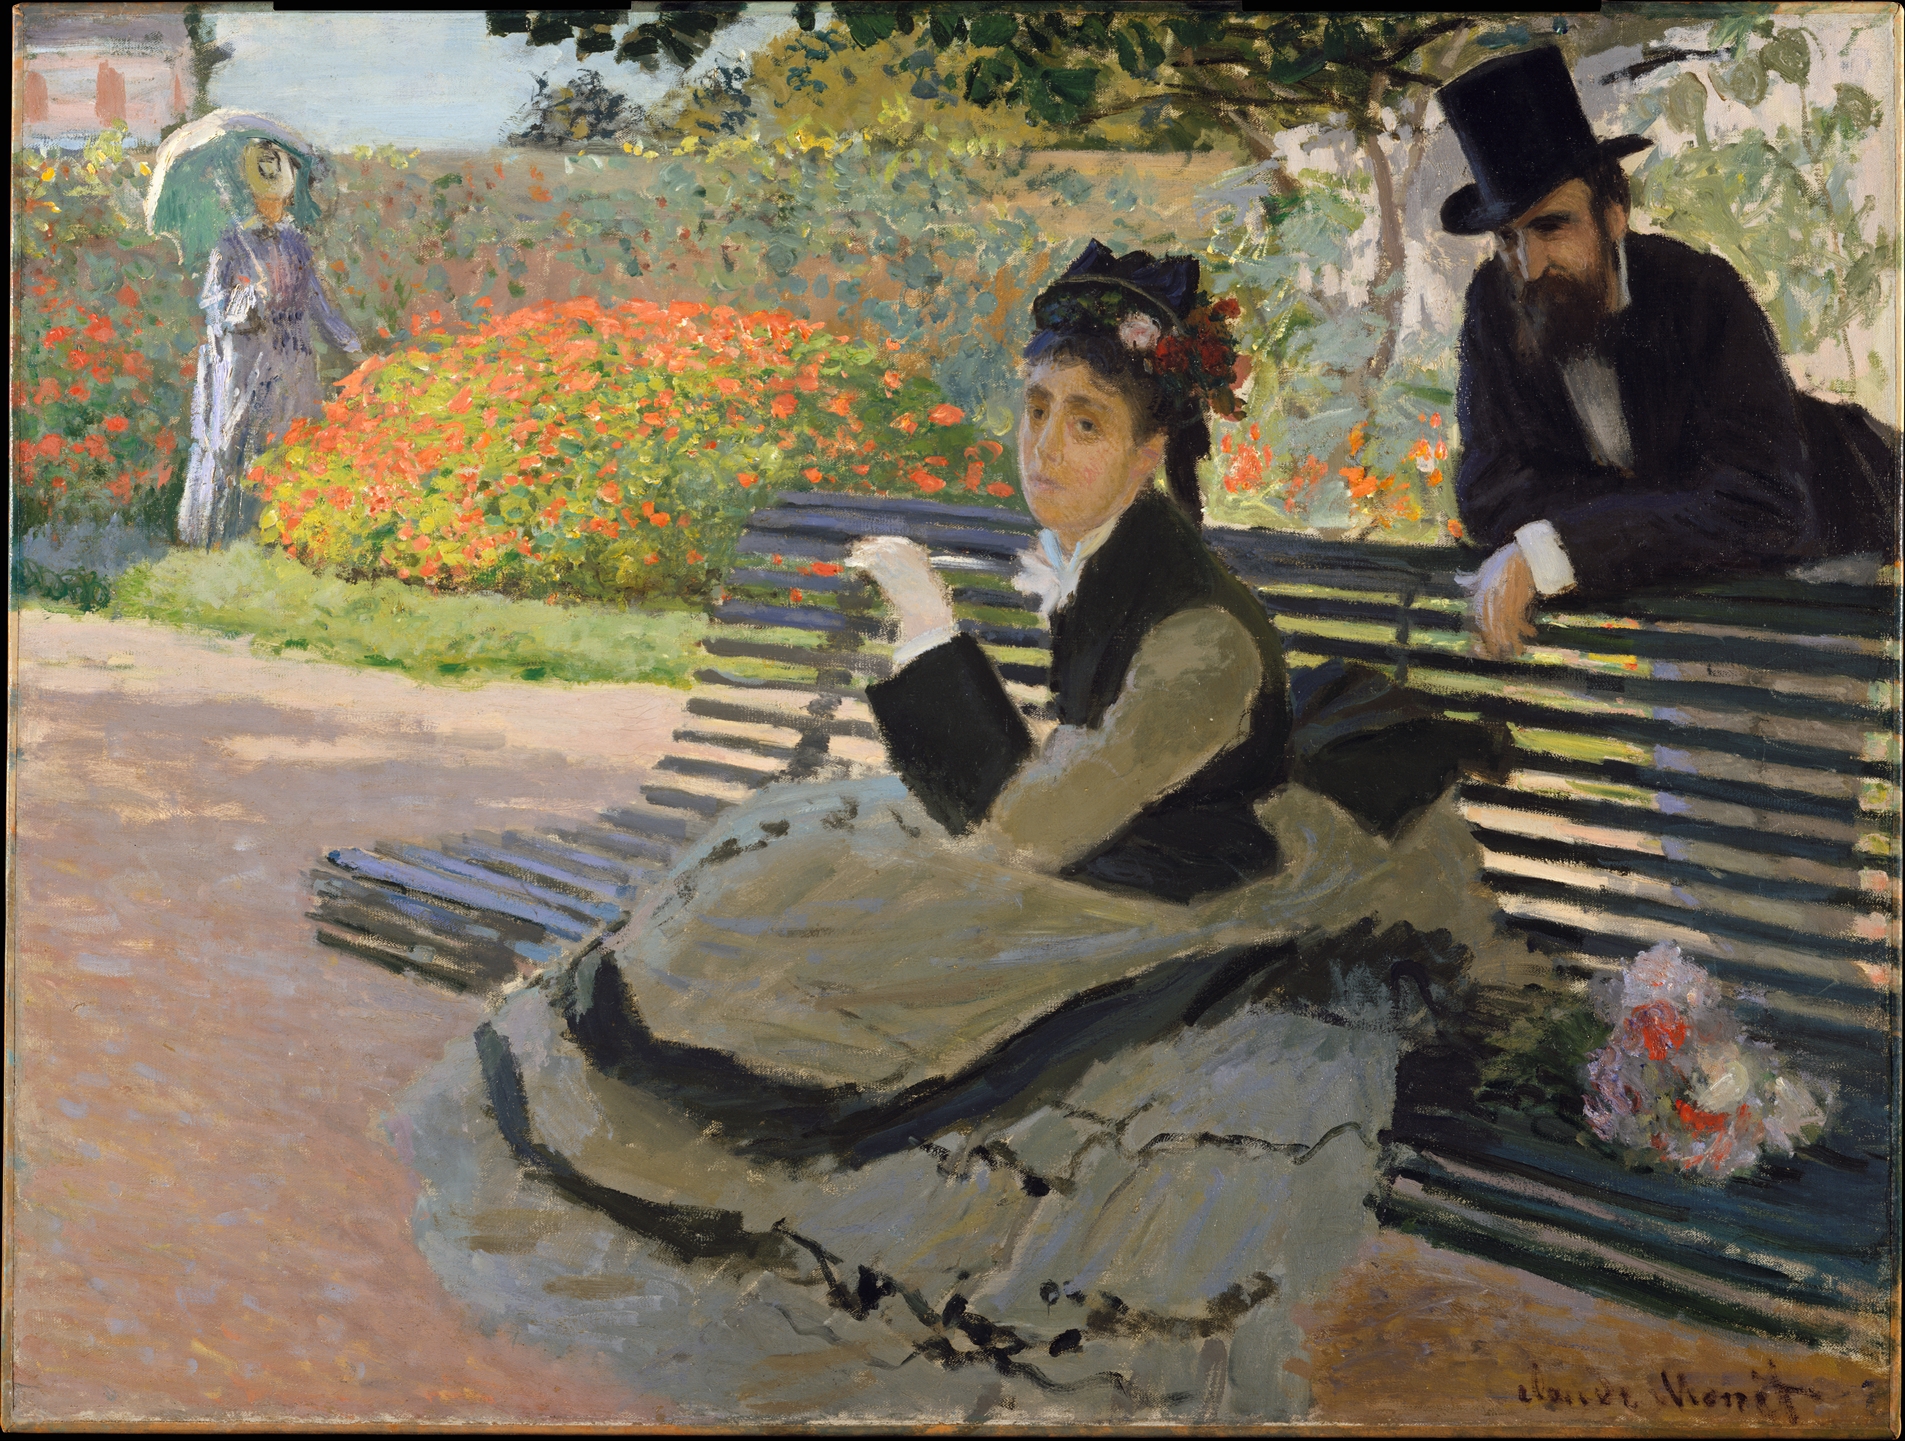 Камилла Моне на садовой скамейке (Camille Monet on a Garden Bench) by Claude Monet - 1873 - 60.6 x 80.3 см 